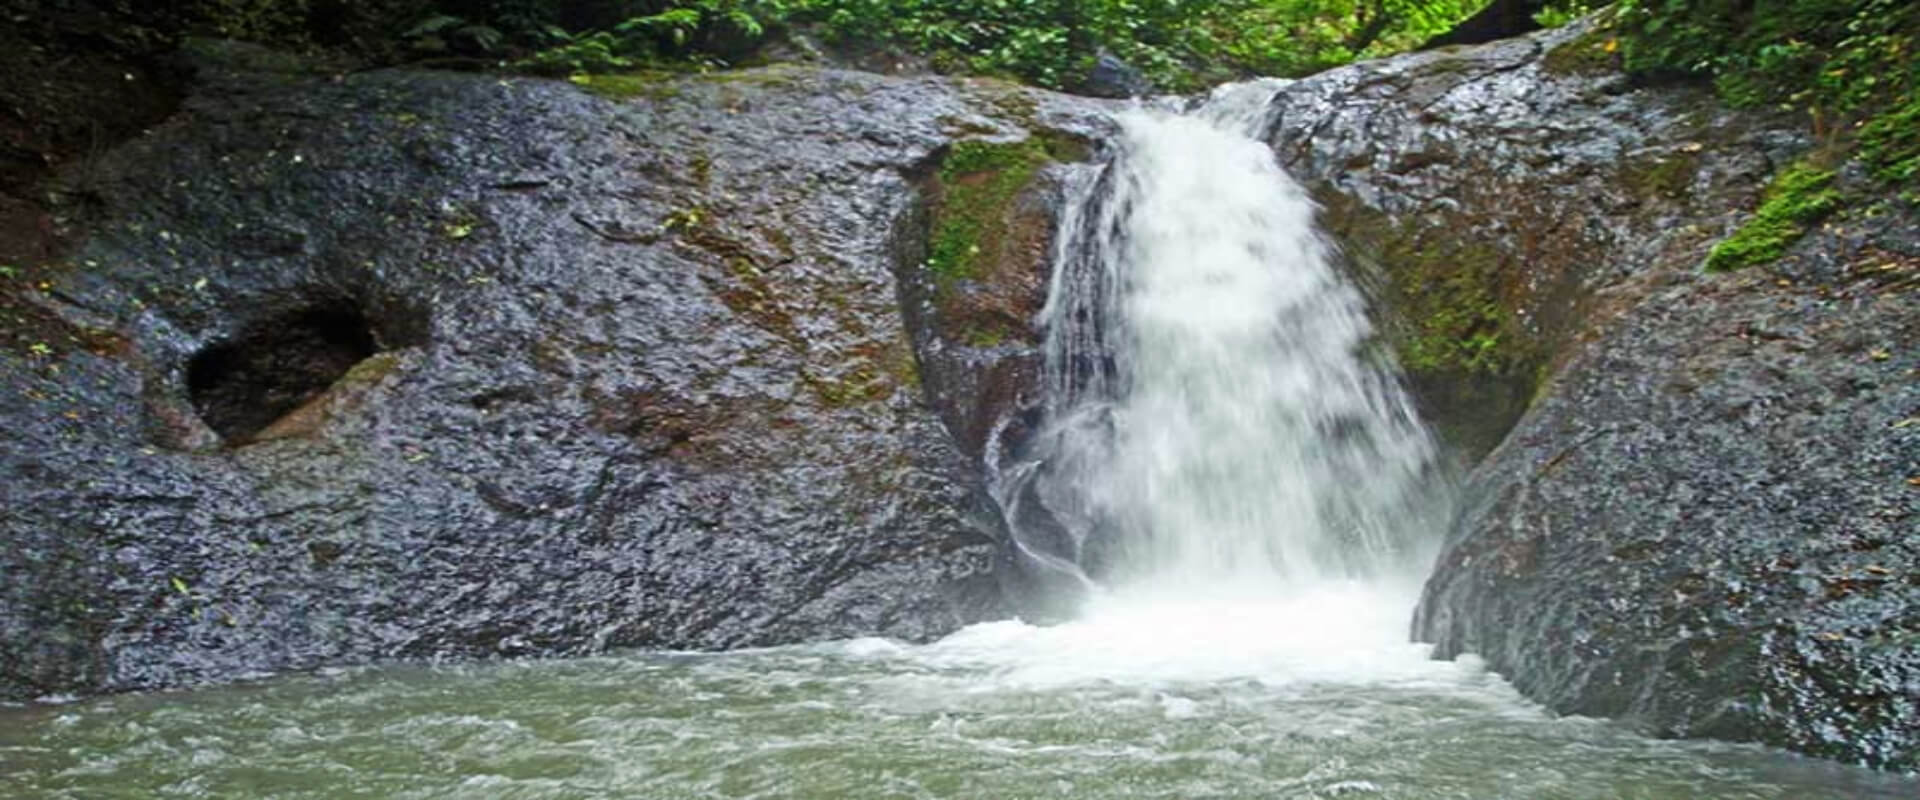 Cataratas El Explorador | Costa Rica Jade Tours